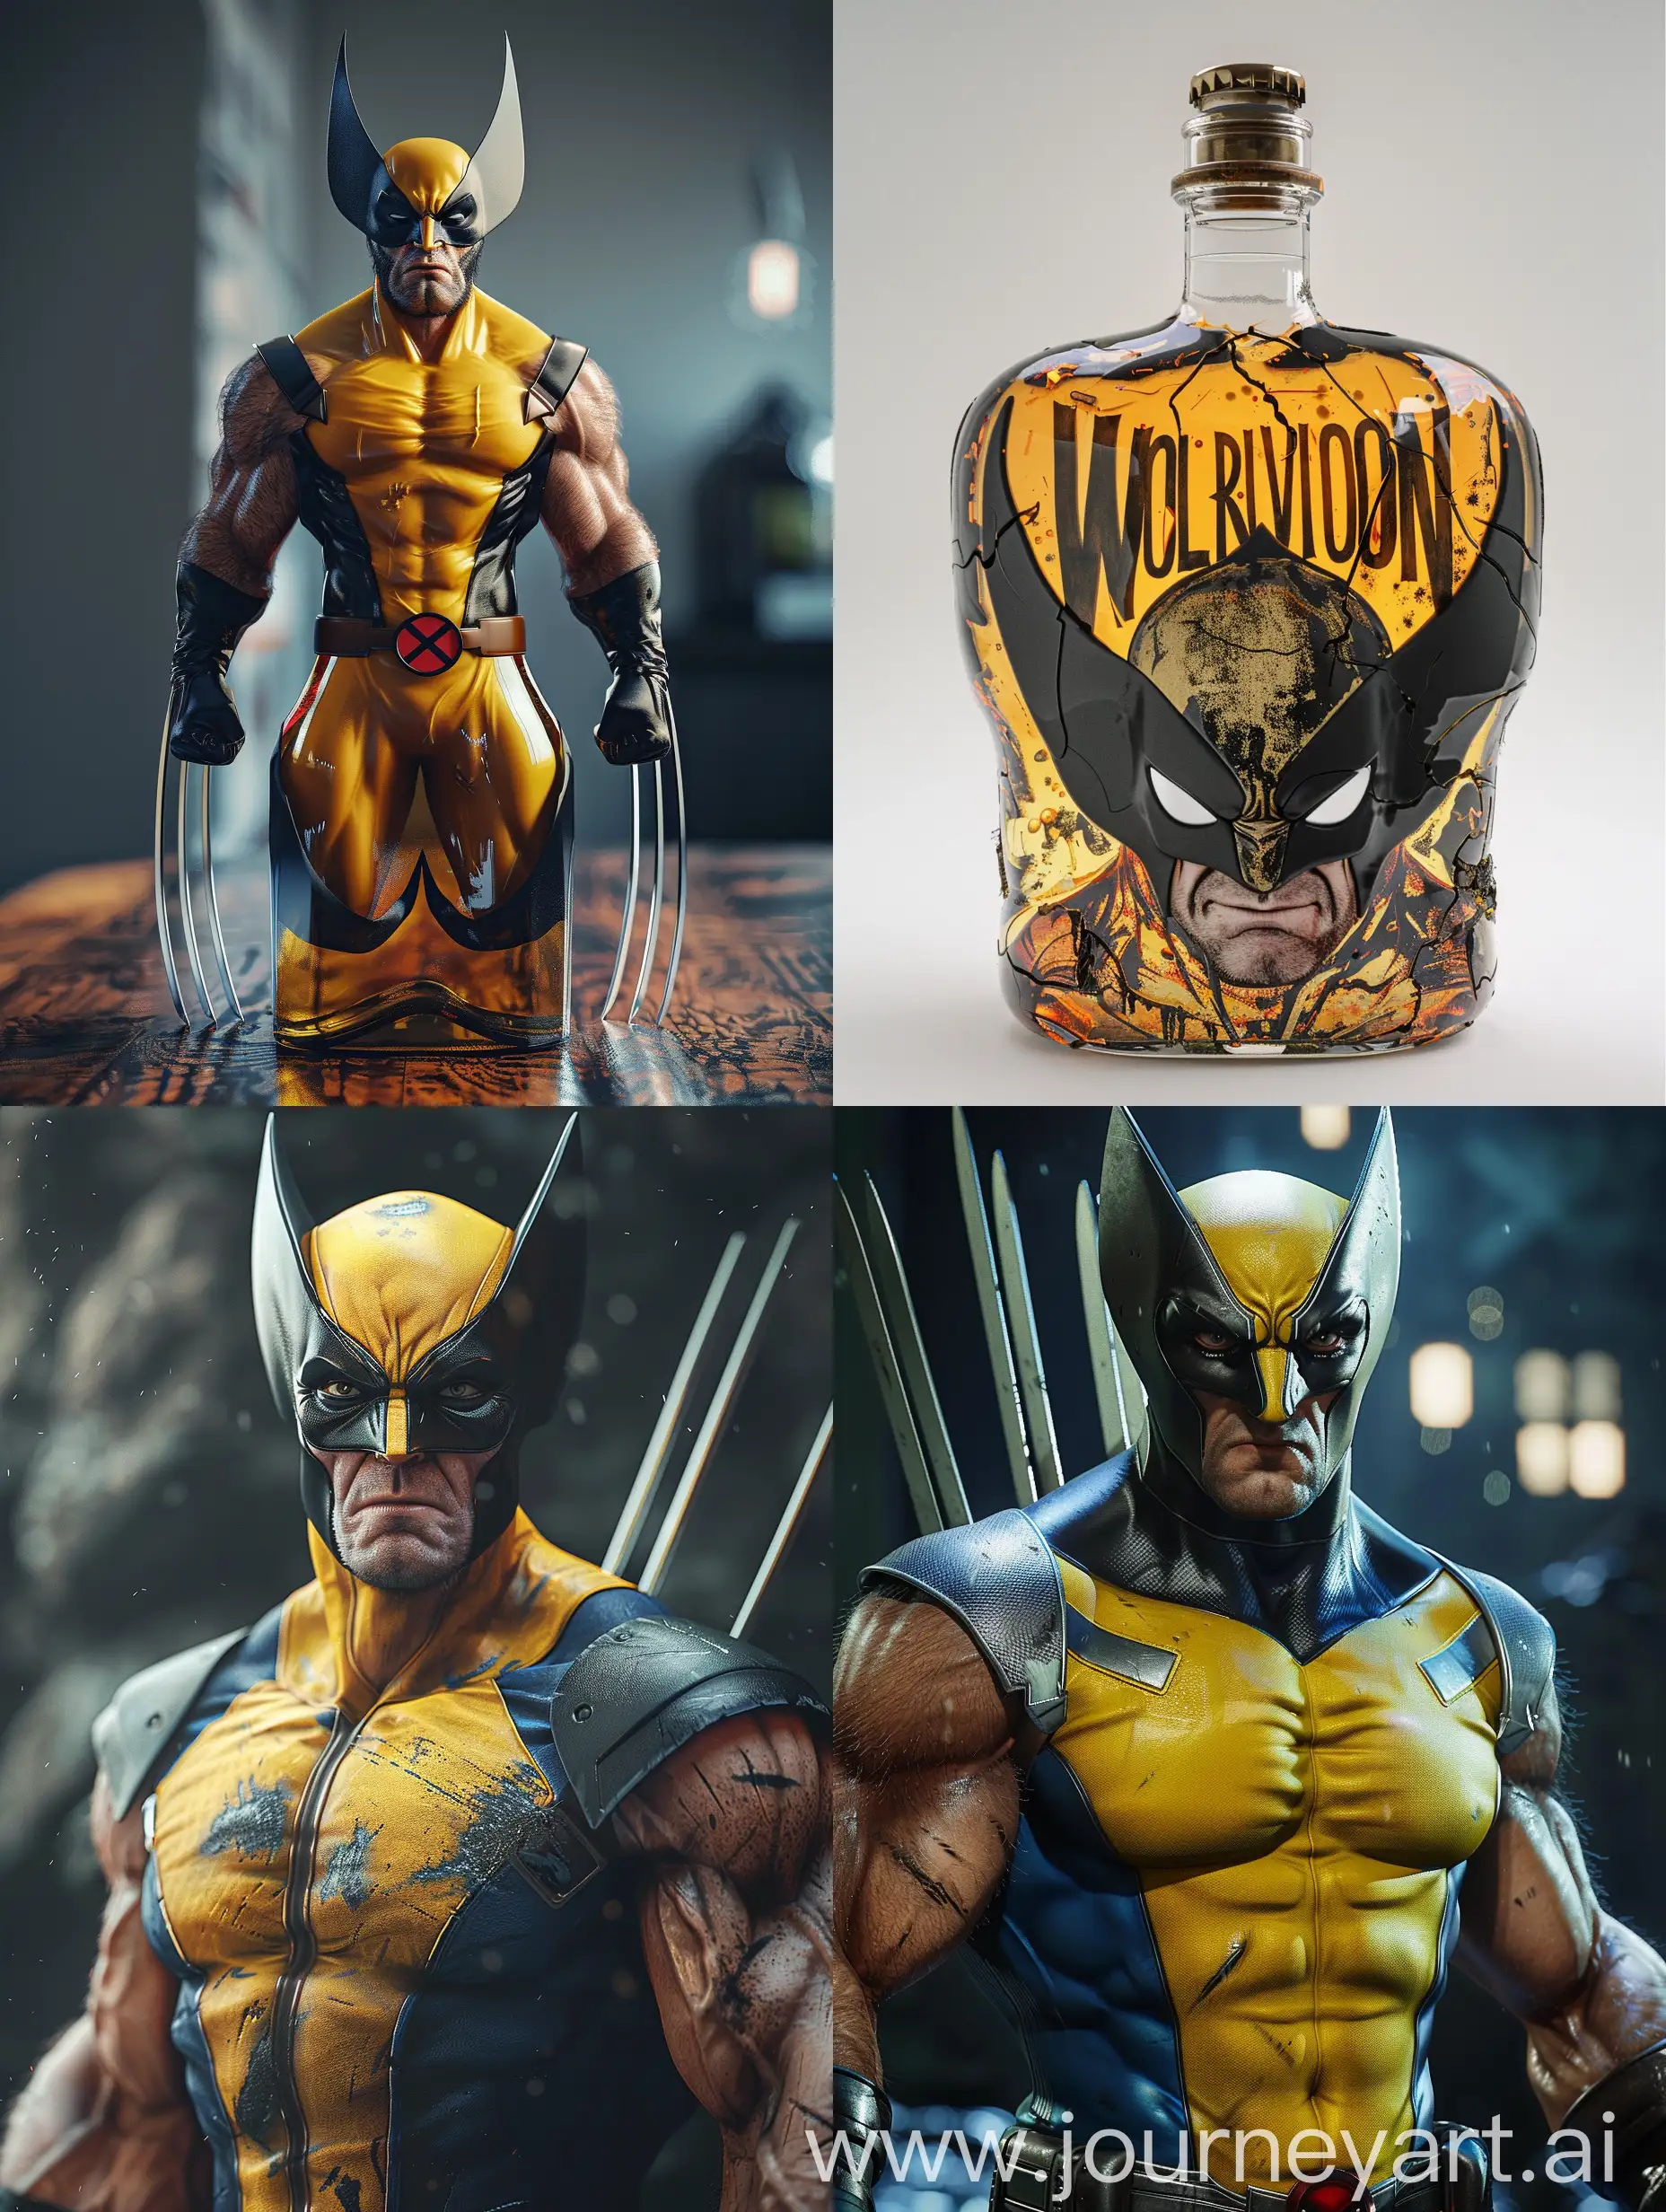 bottle wolverine text " Wolverine", ultra realistic, hyper detailed, 8k, --v 6.0